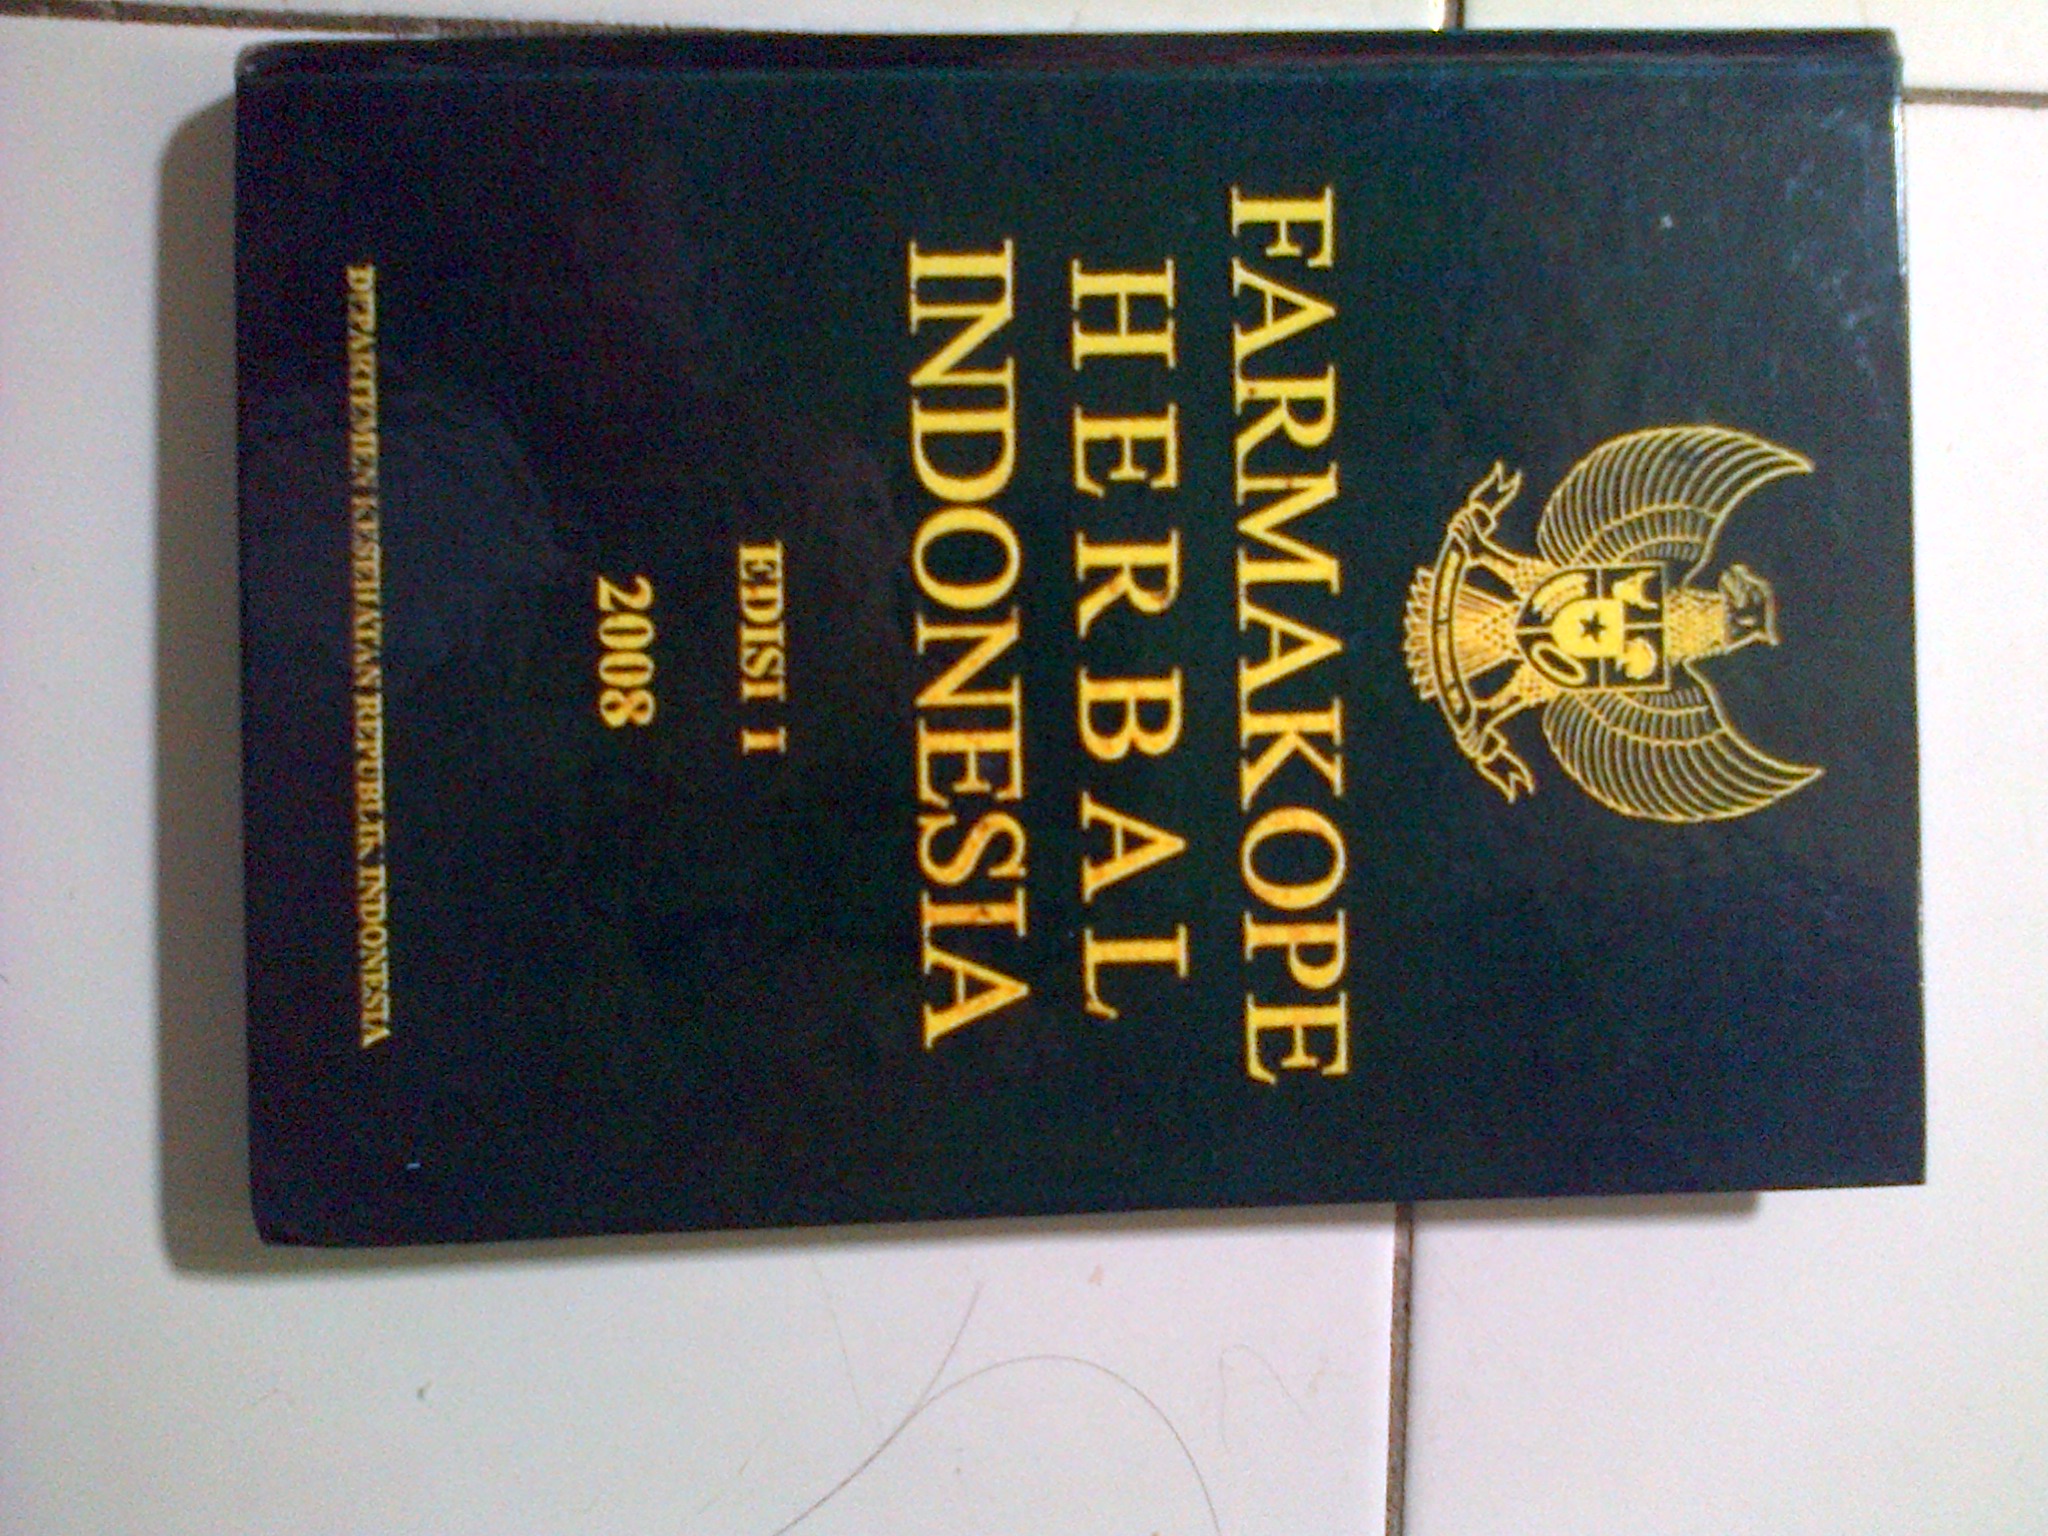 ebook farmakope indonesia edisi 3 pdf